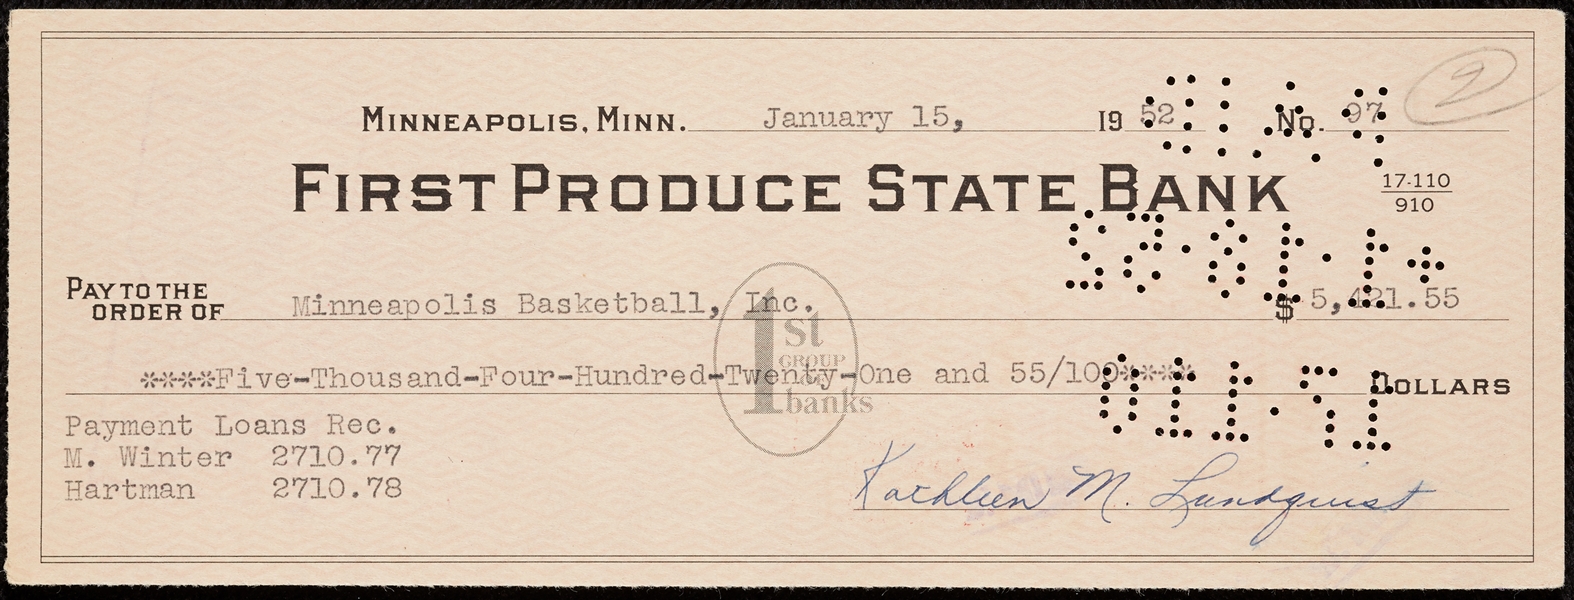 Minneapolis Basketball Club (Lakers) Endorsed Check (1952)